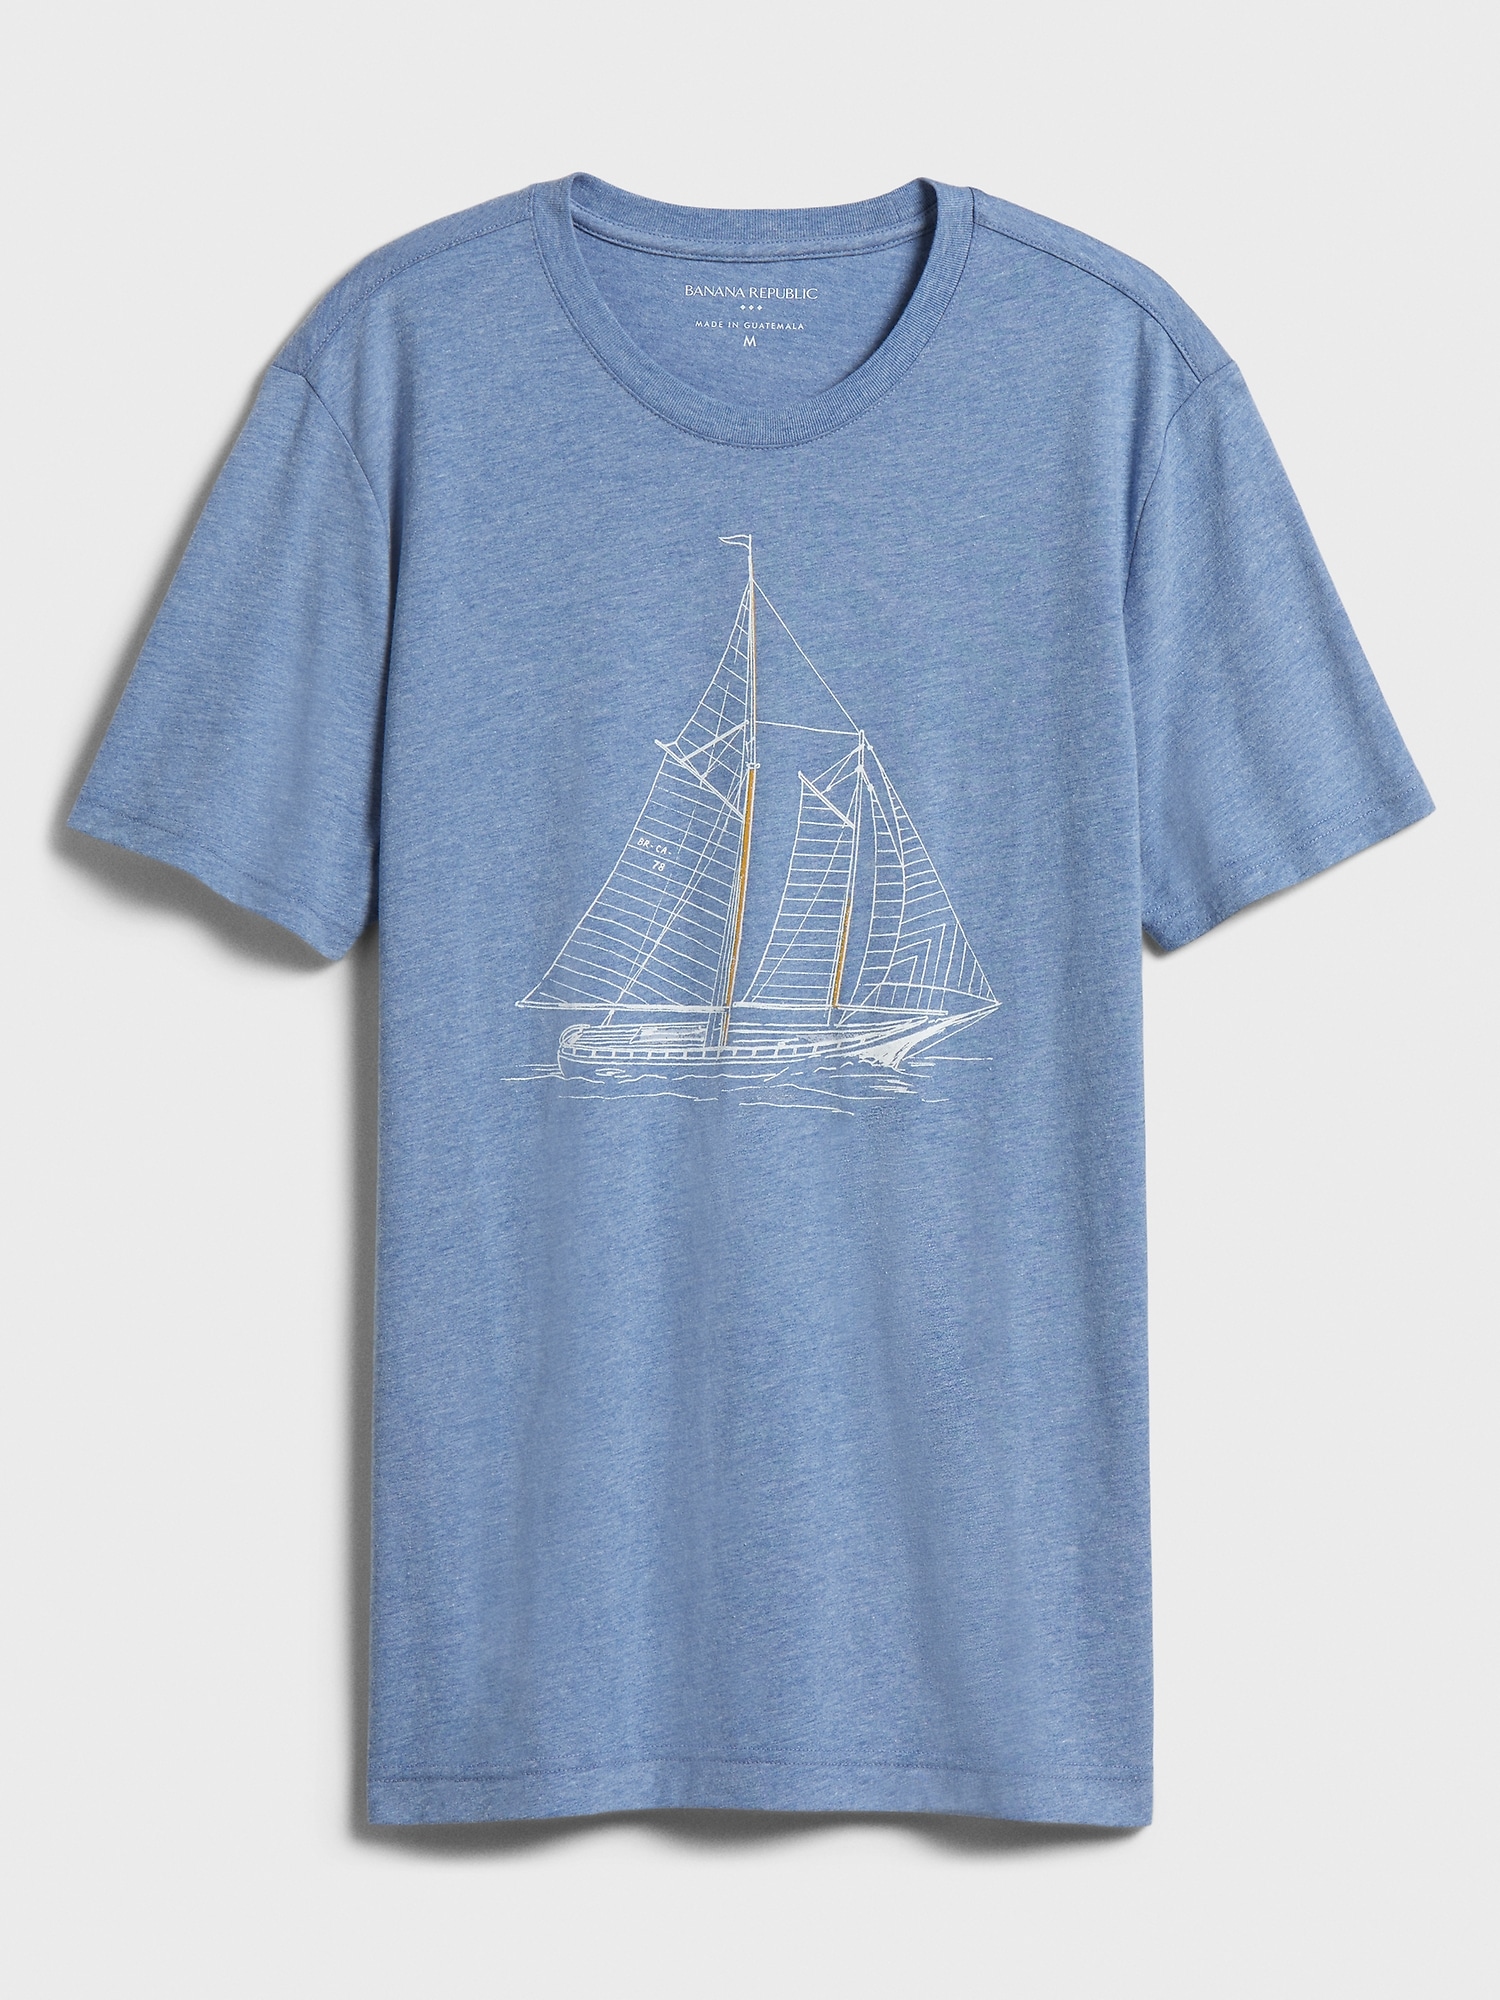 Sailboat Sketch Graphic T-Shirt